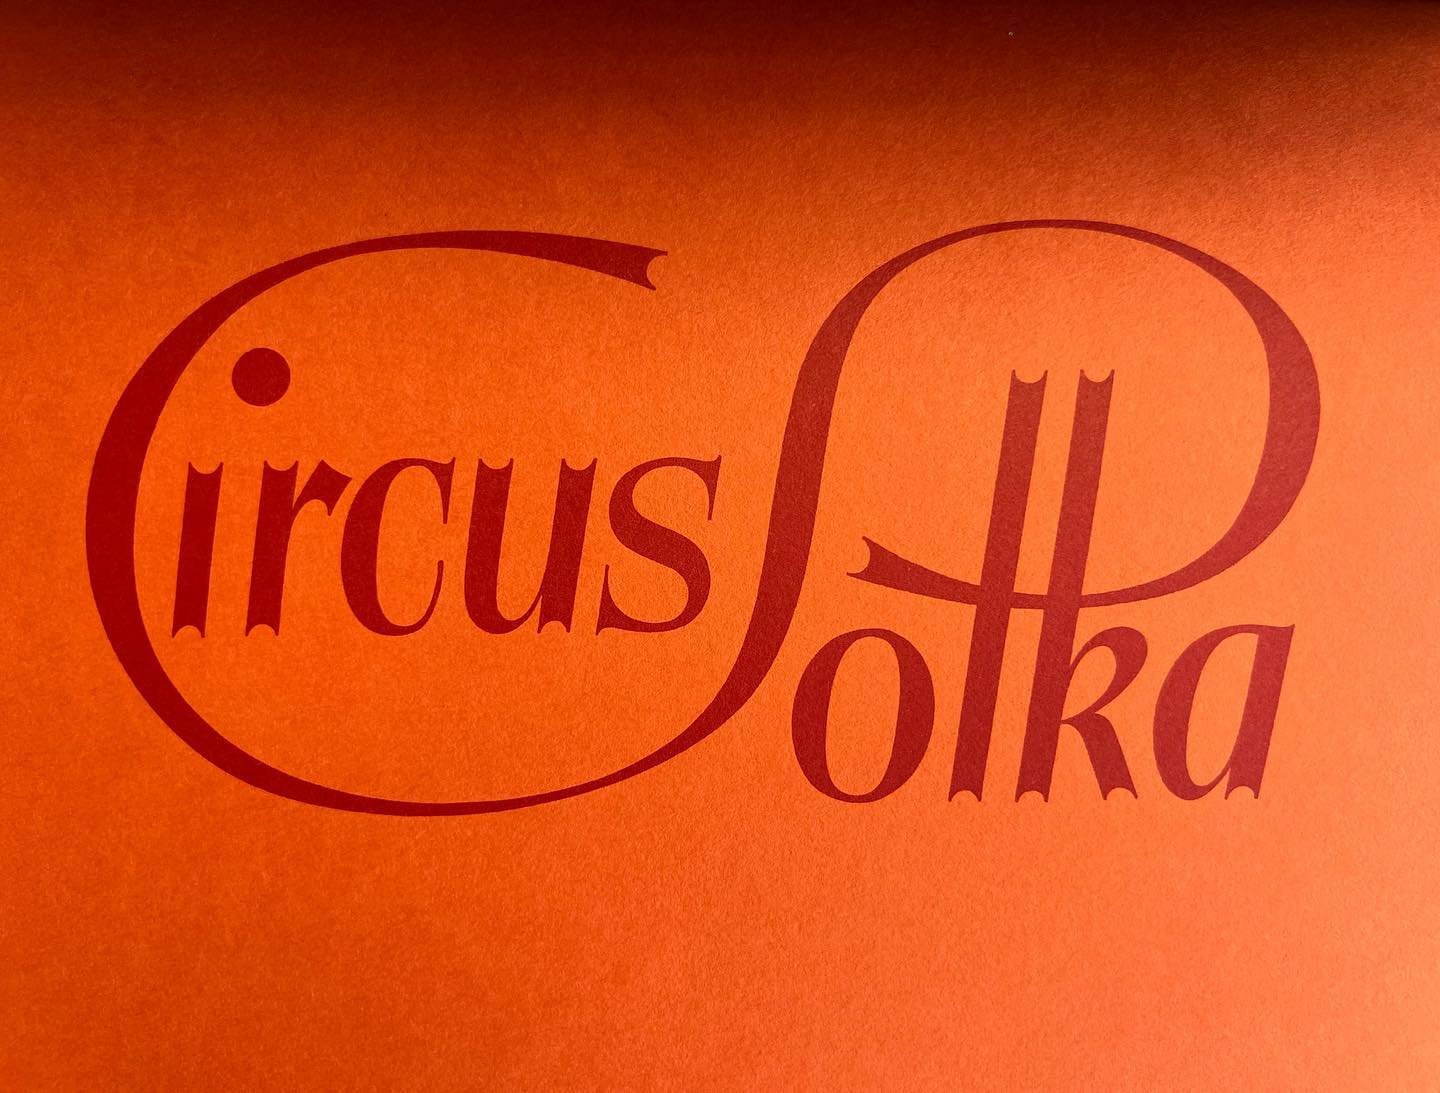 Circus Polka
.
#davidkindersley #handdrawntype #handdrawnletters #handdrawnlettering #calligraphy #typography #circuspolka #ballet #stravinsky